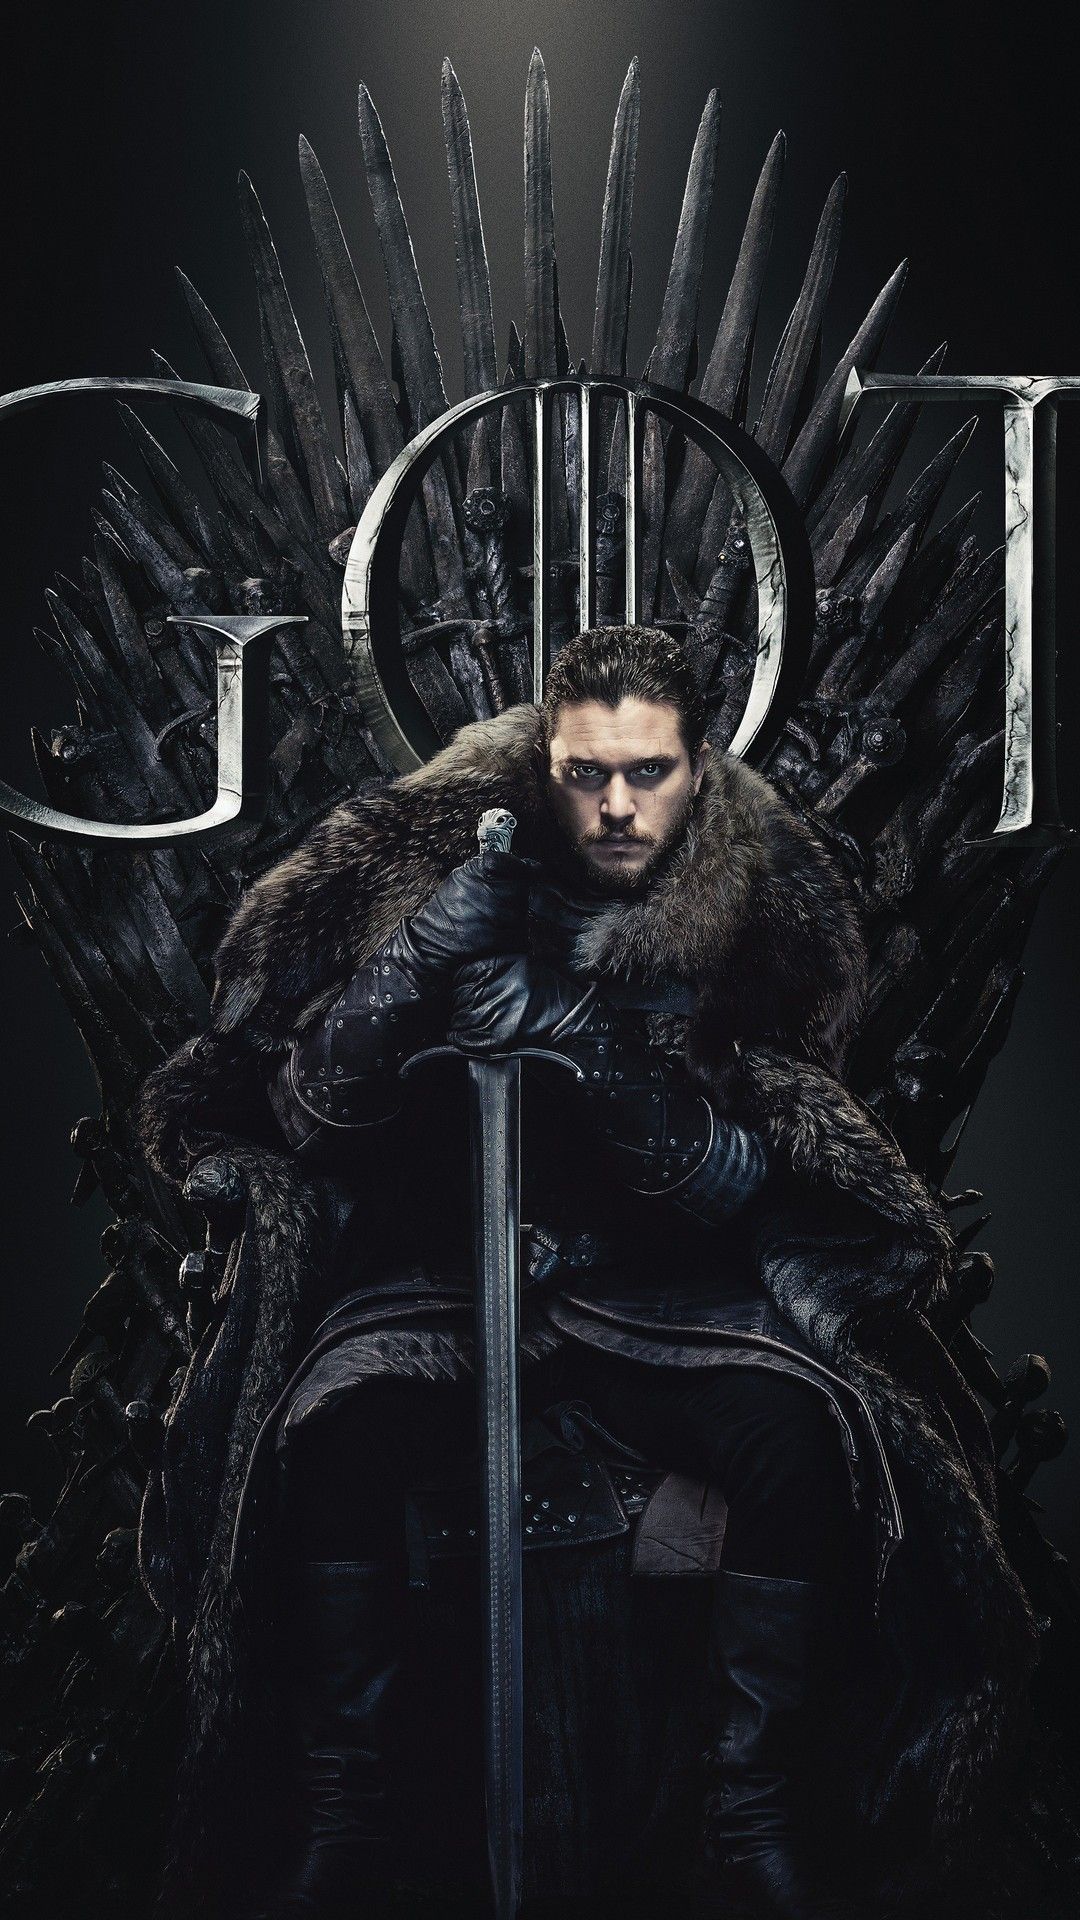 Game of Thrones 8 Season iPhone X Wallpaper Movie Poster